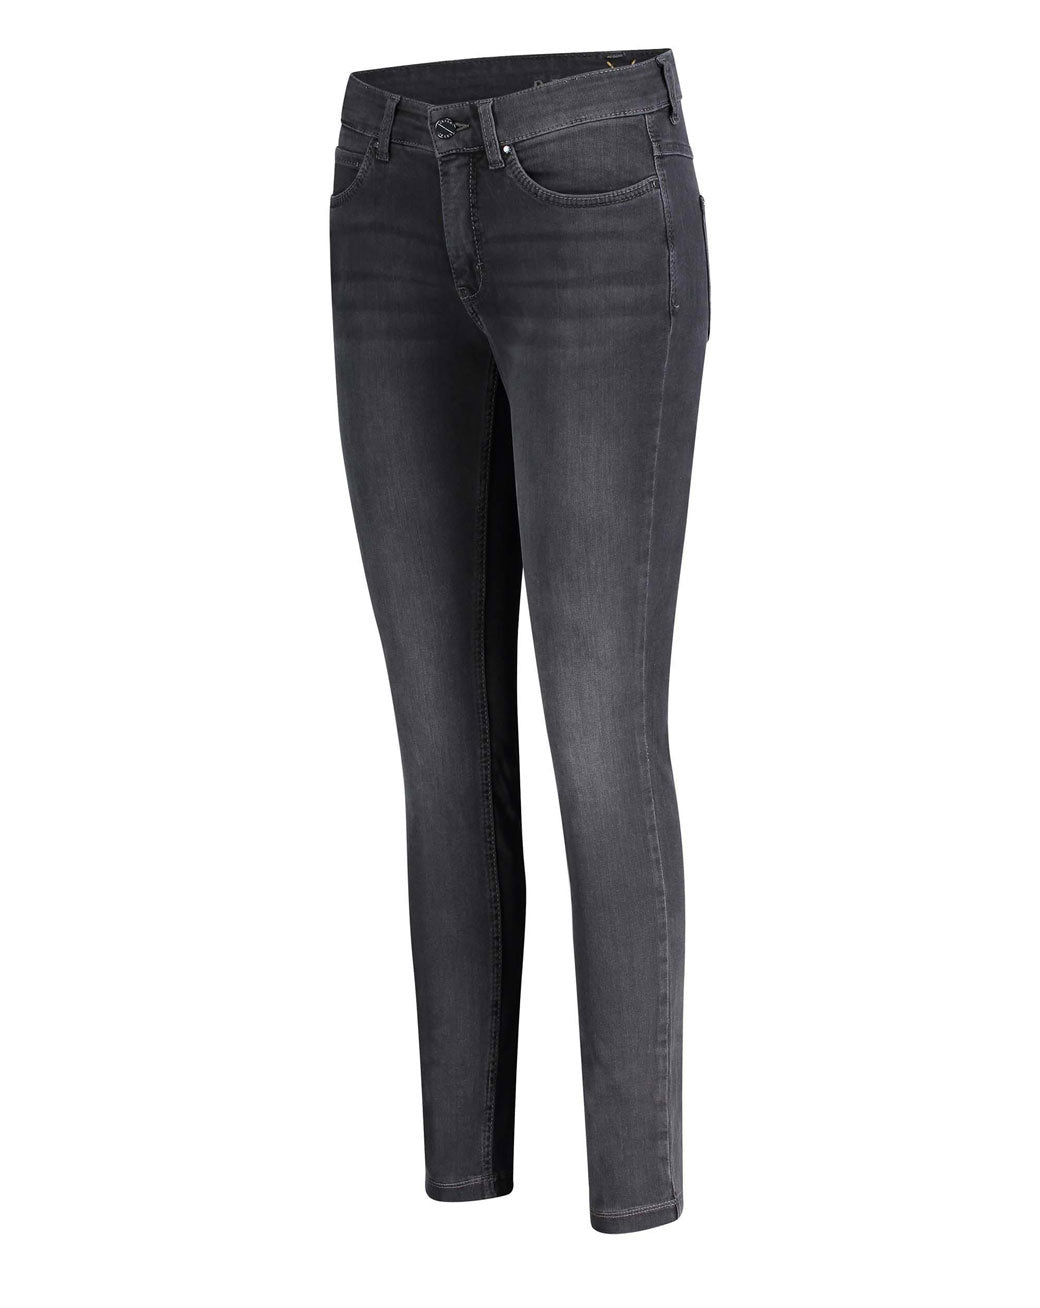 kleding lange vrouwen mac jeans dream skinny grey washed